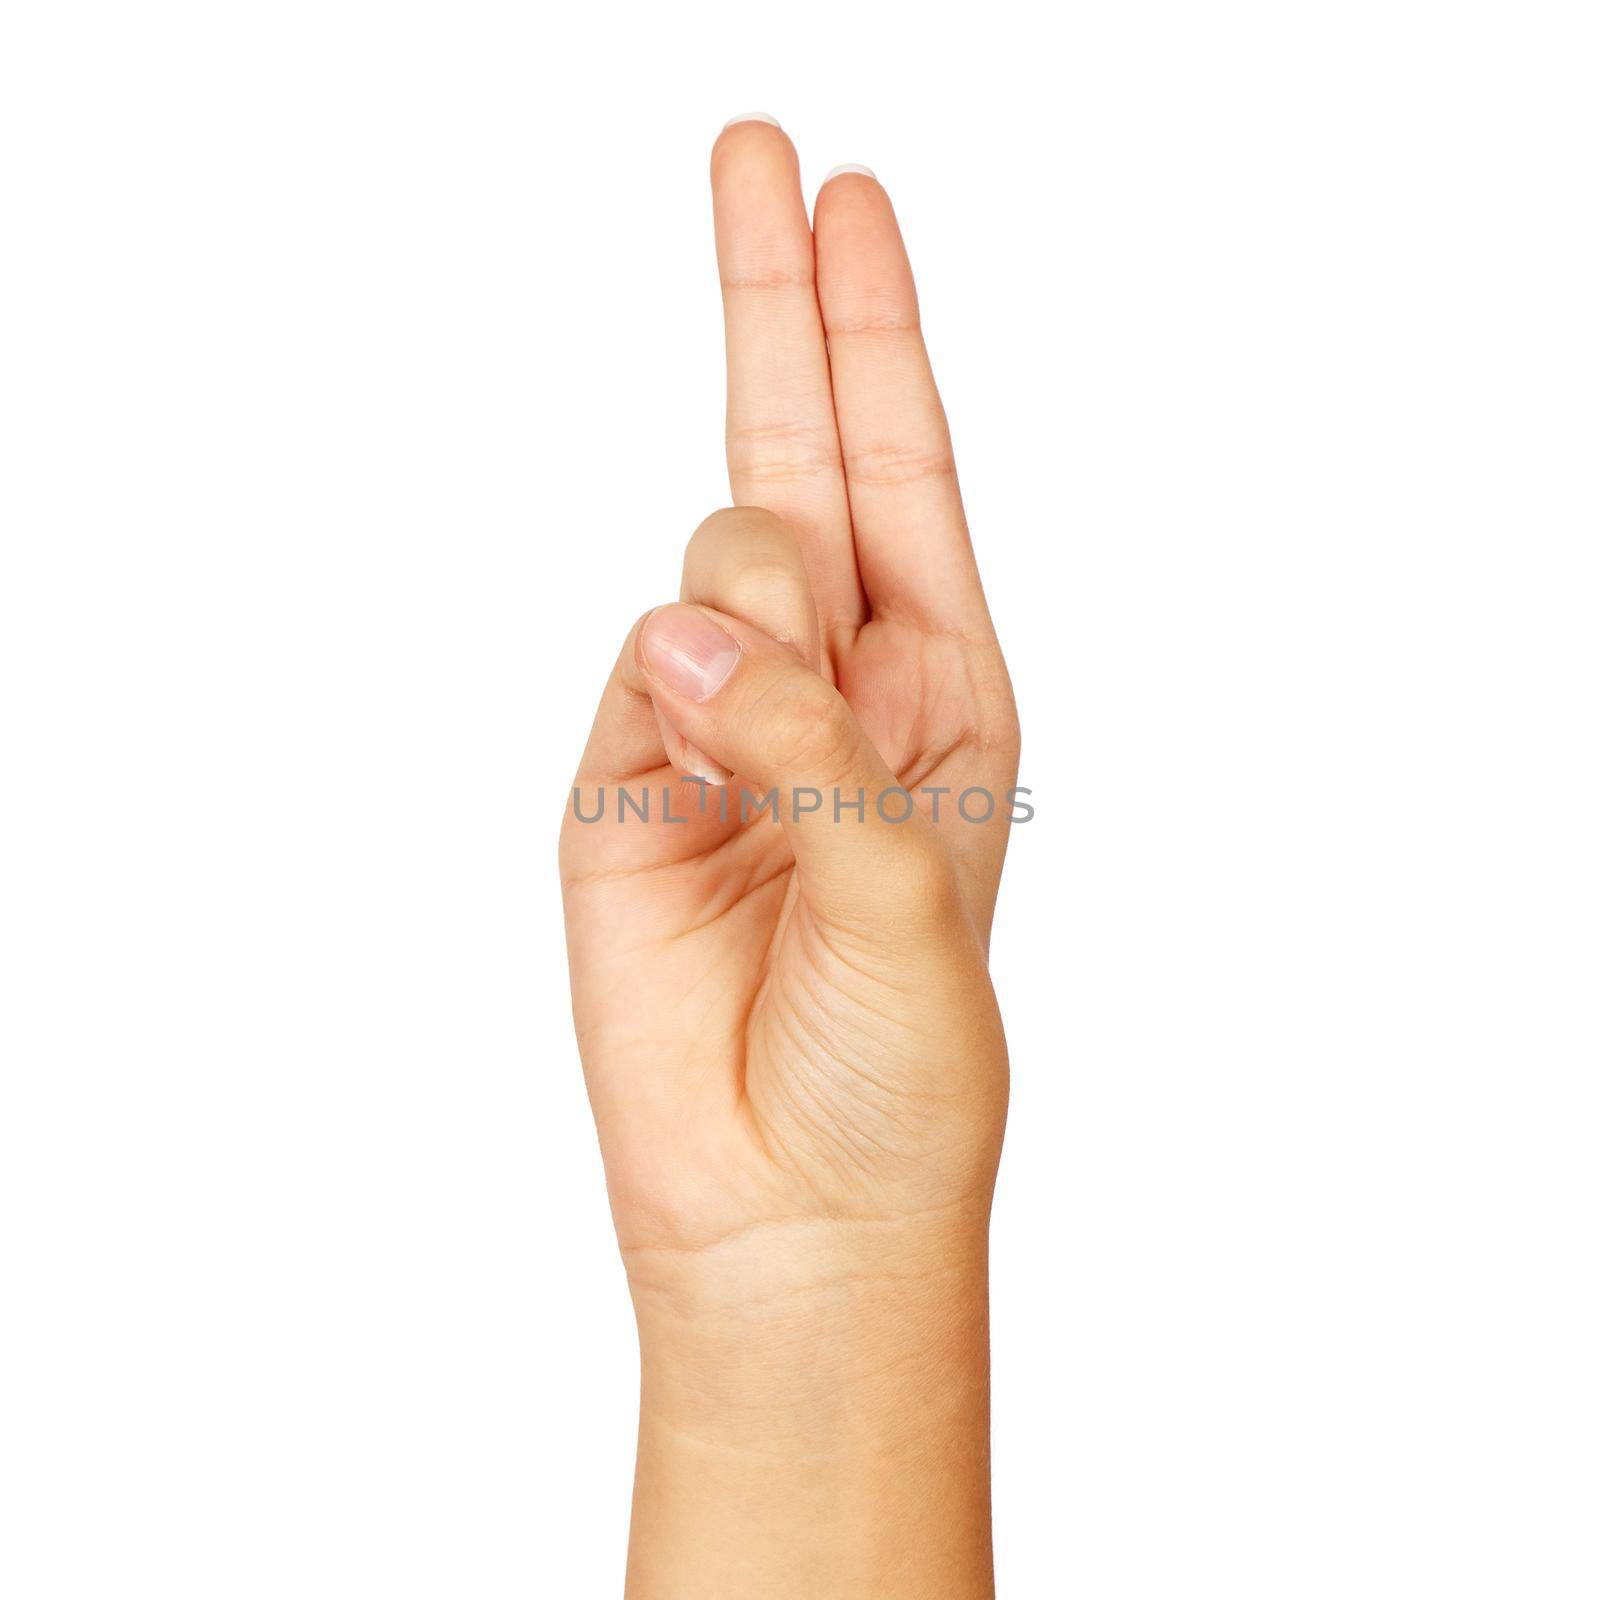 american sign language. female hand showing letter u by raddnatt